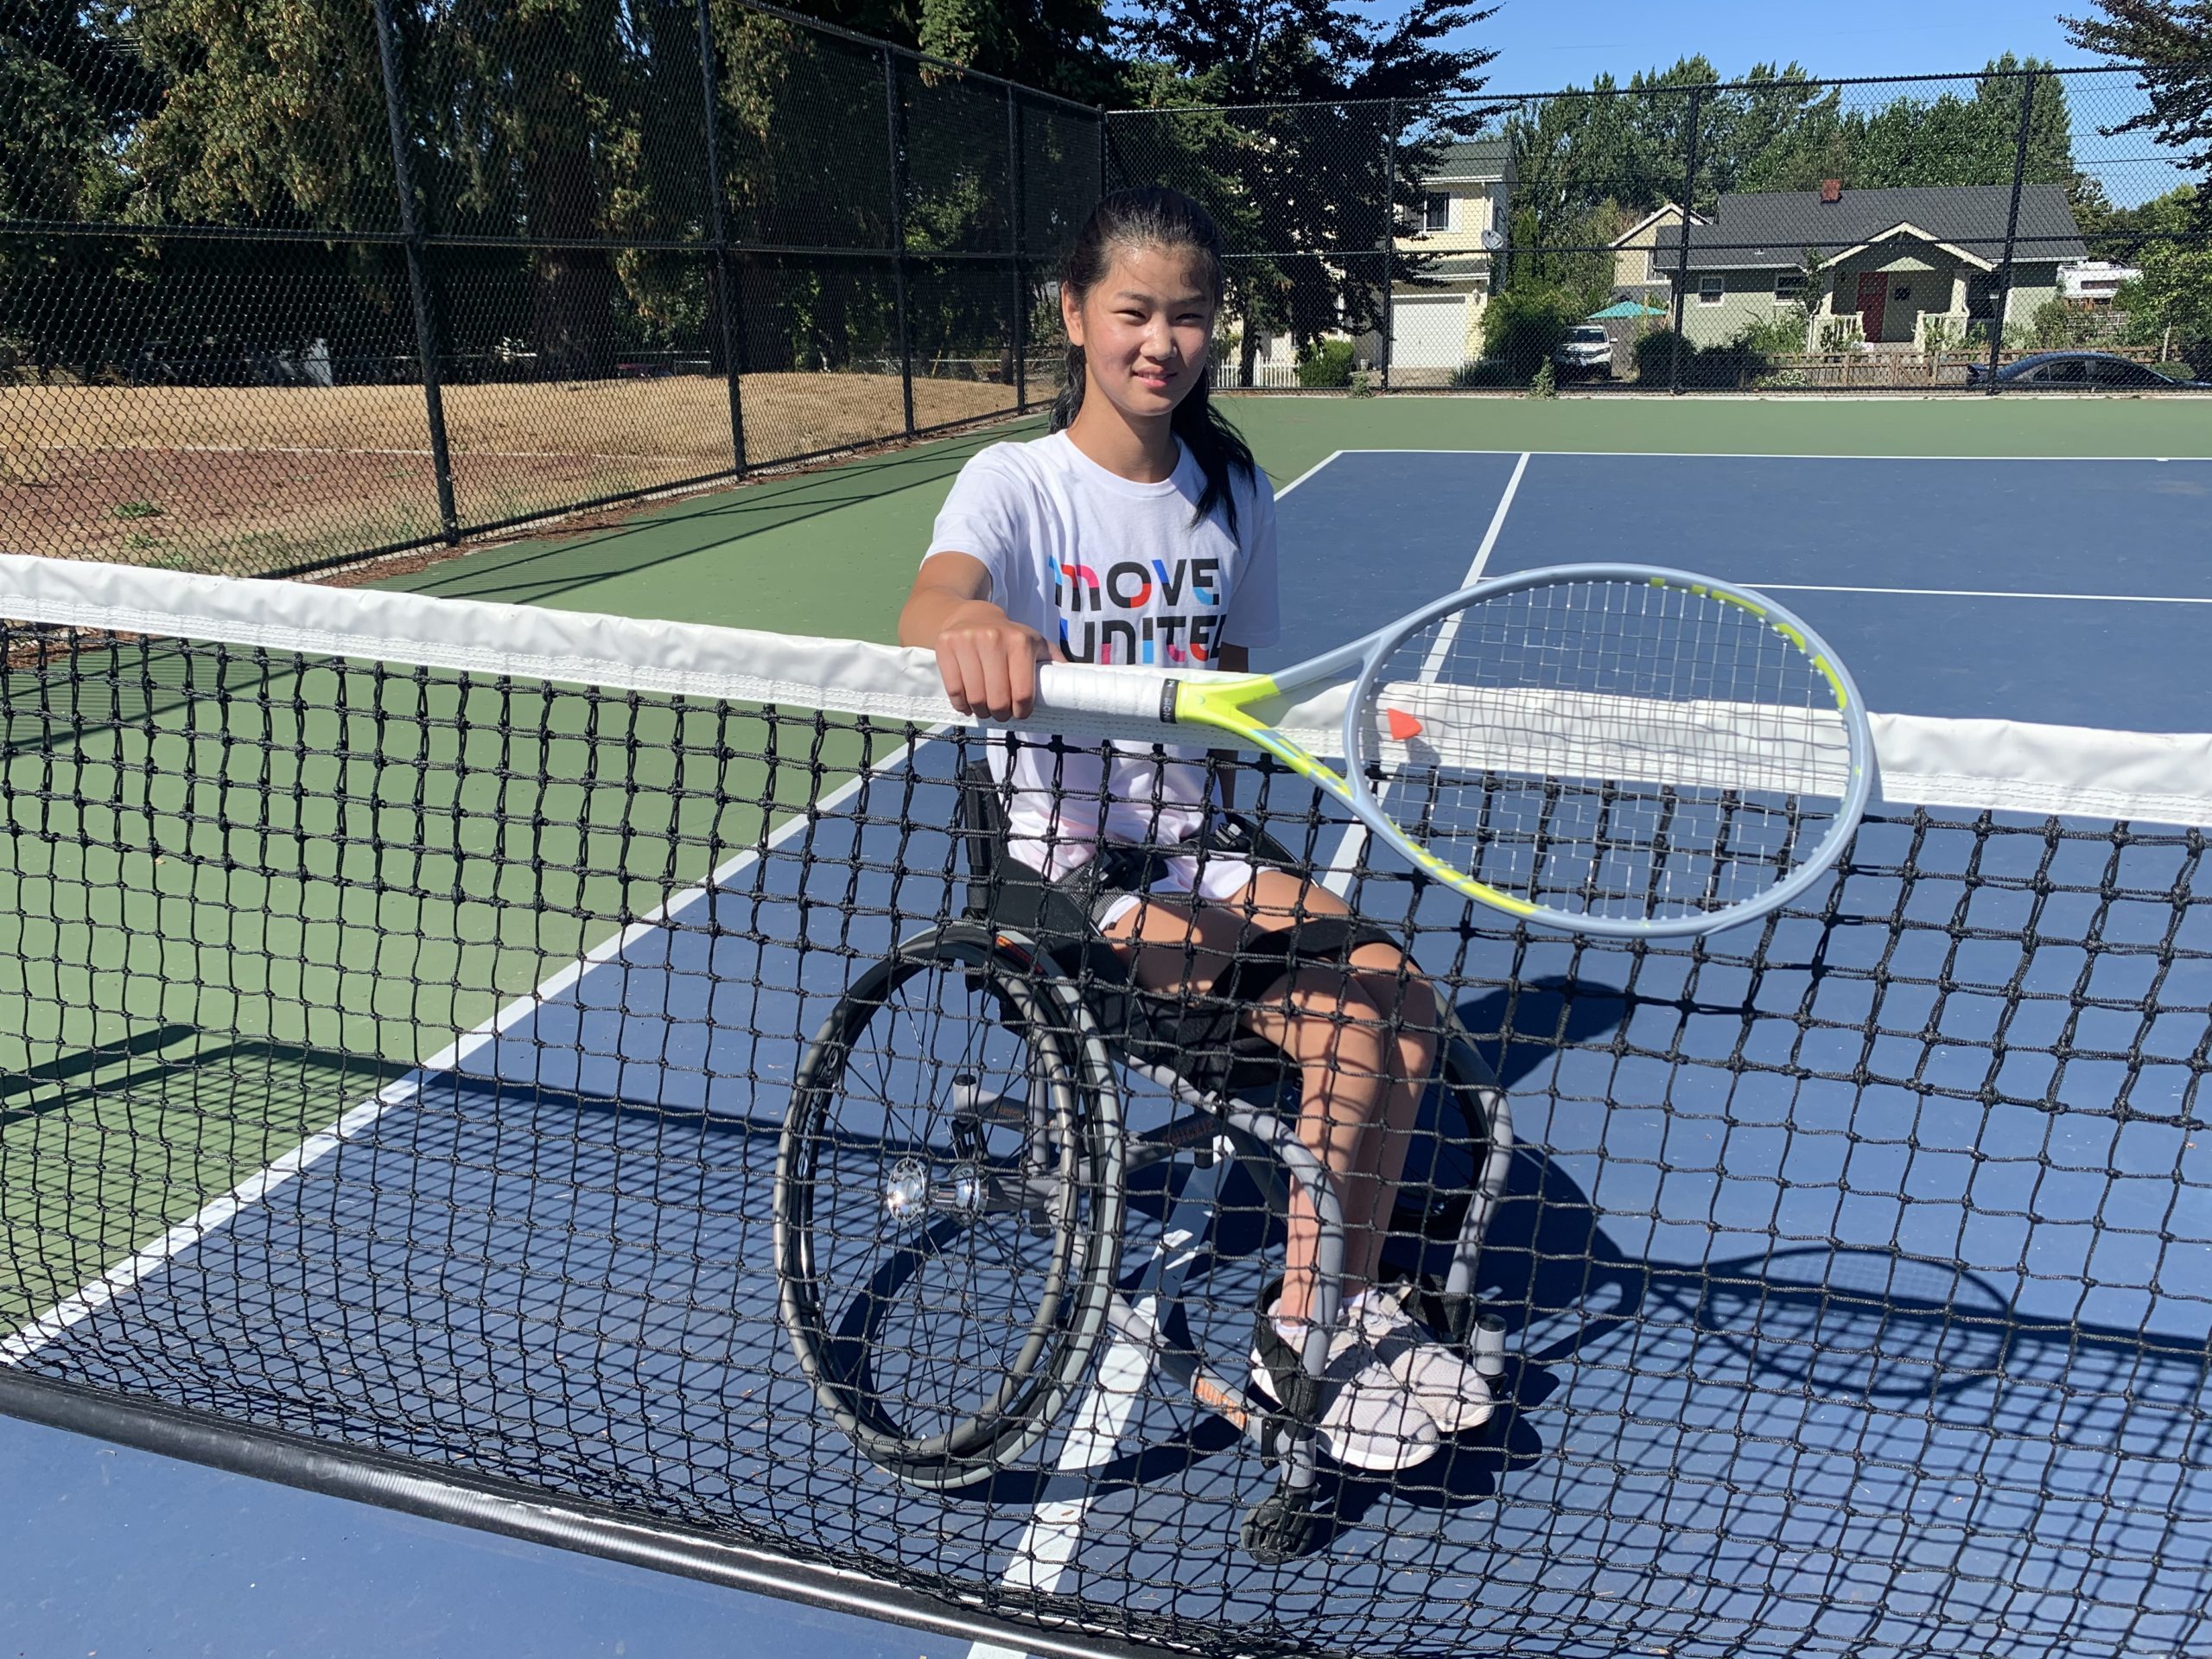 Female athlete in a wheelchair behind a tennis net holding a tennis racket